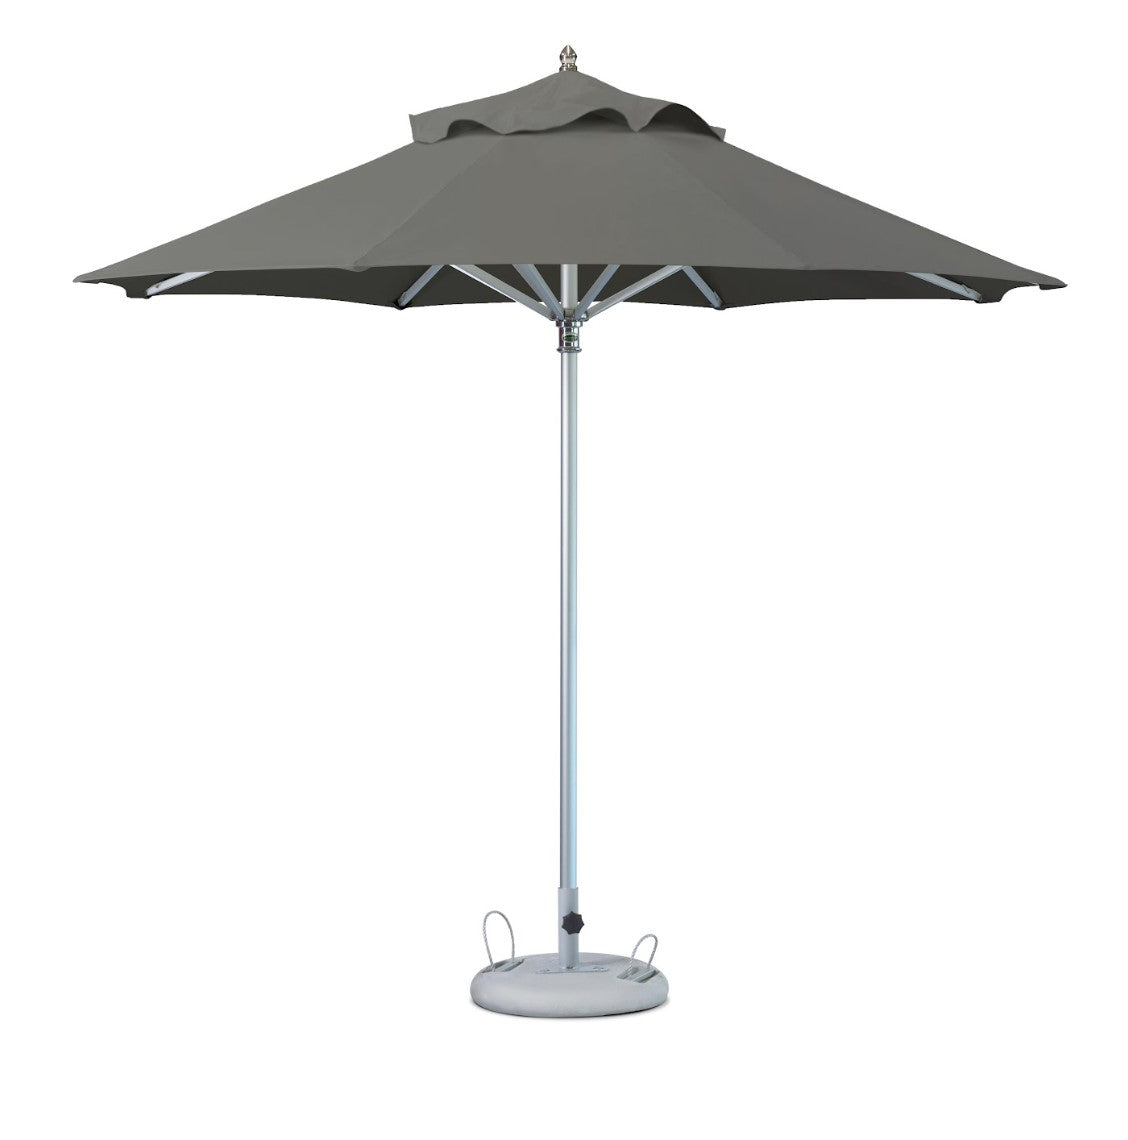 10' Charcoal Polyester Round Market Patio Umbrella